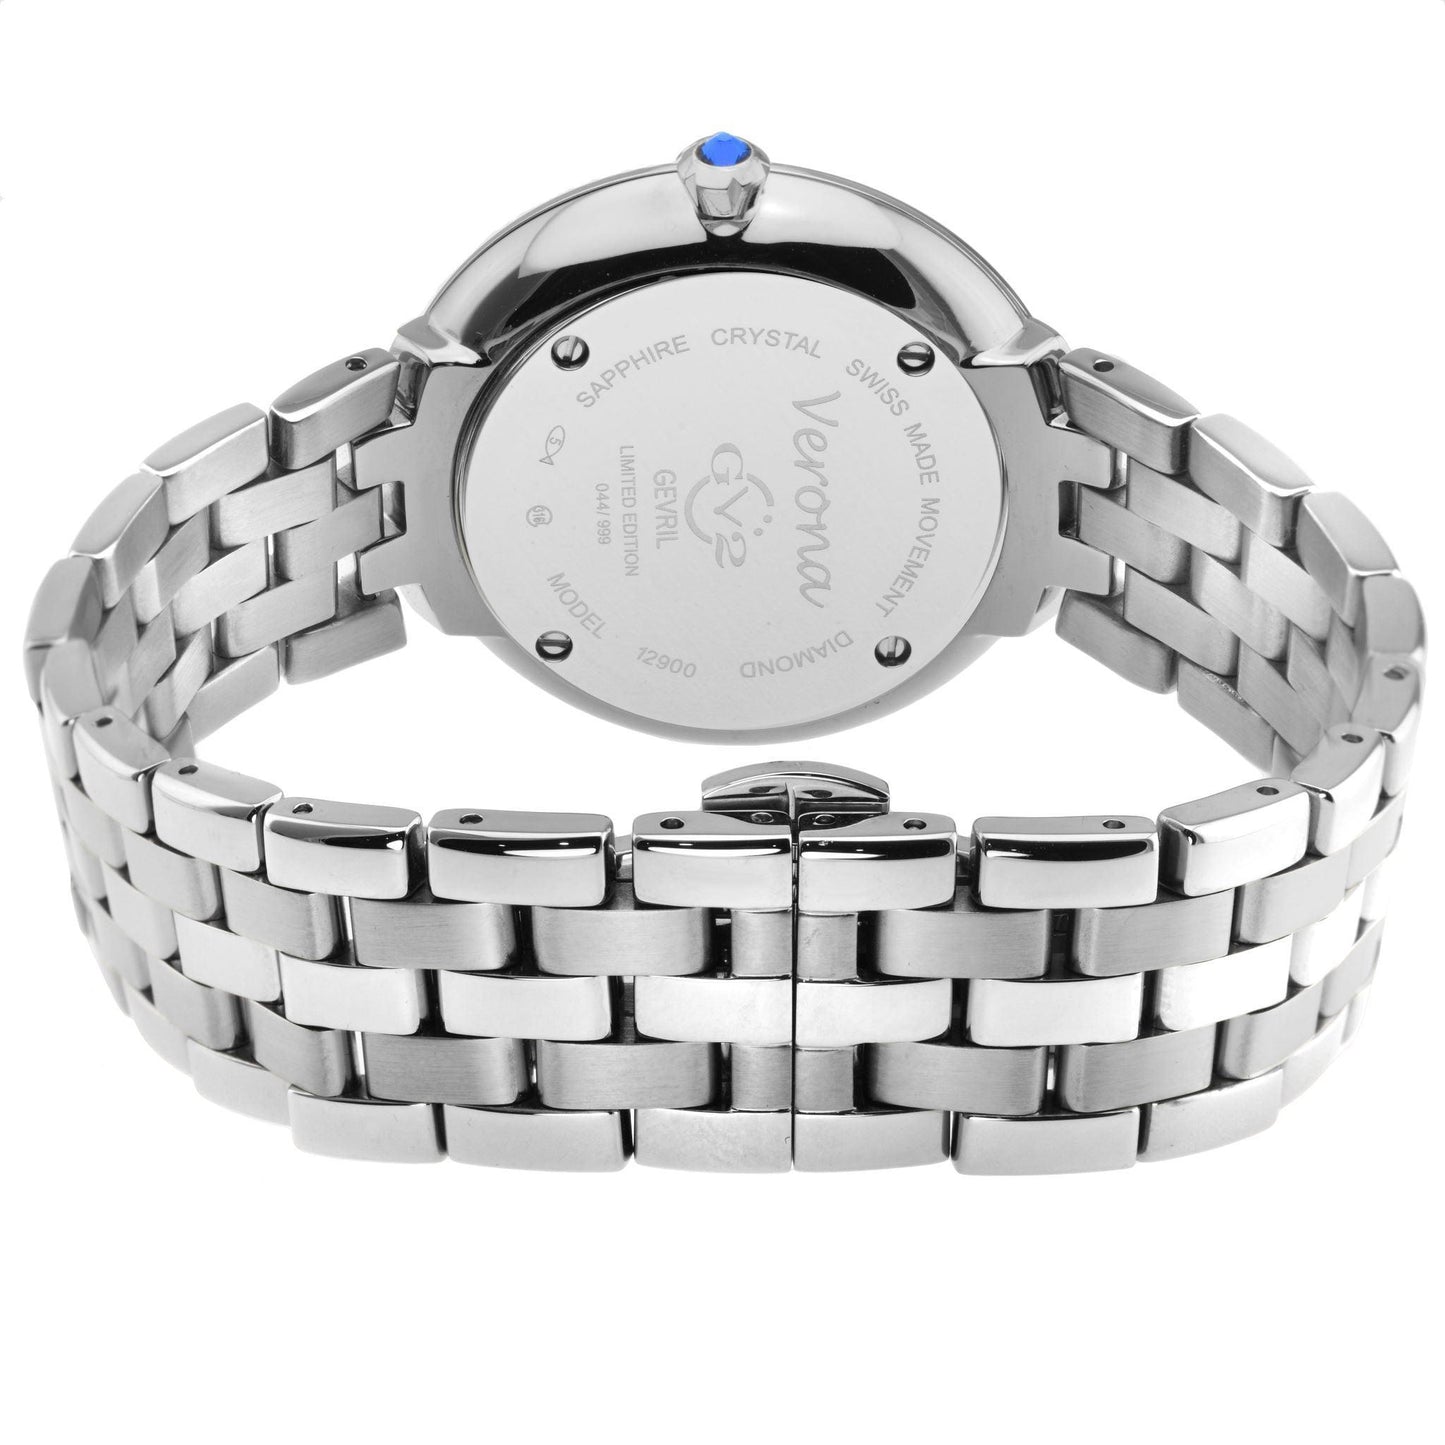 Gevril-Luxury-Swiss-Watches-GV2 Verona Diamond-12900B